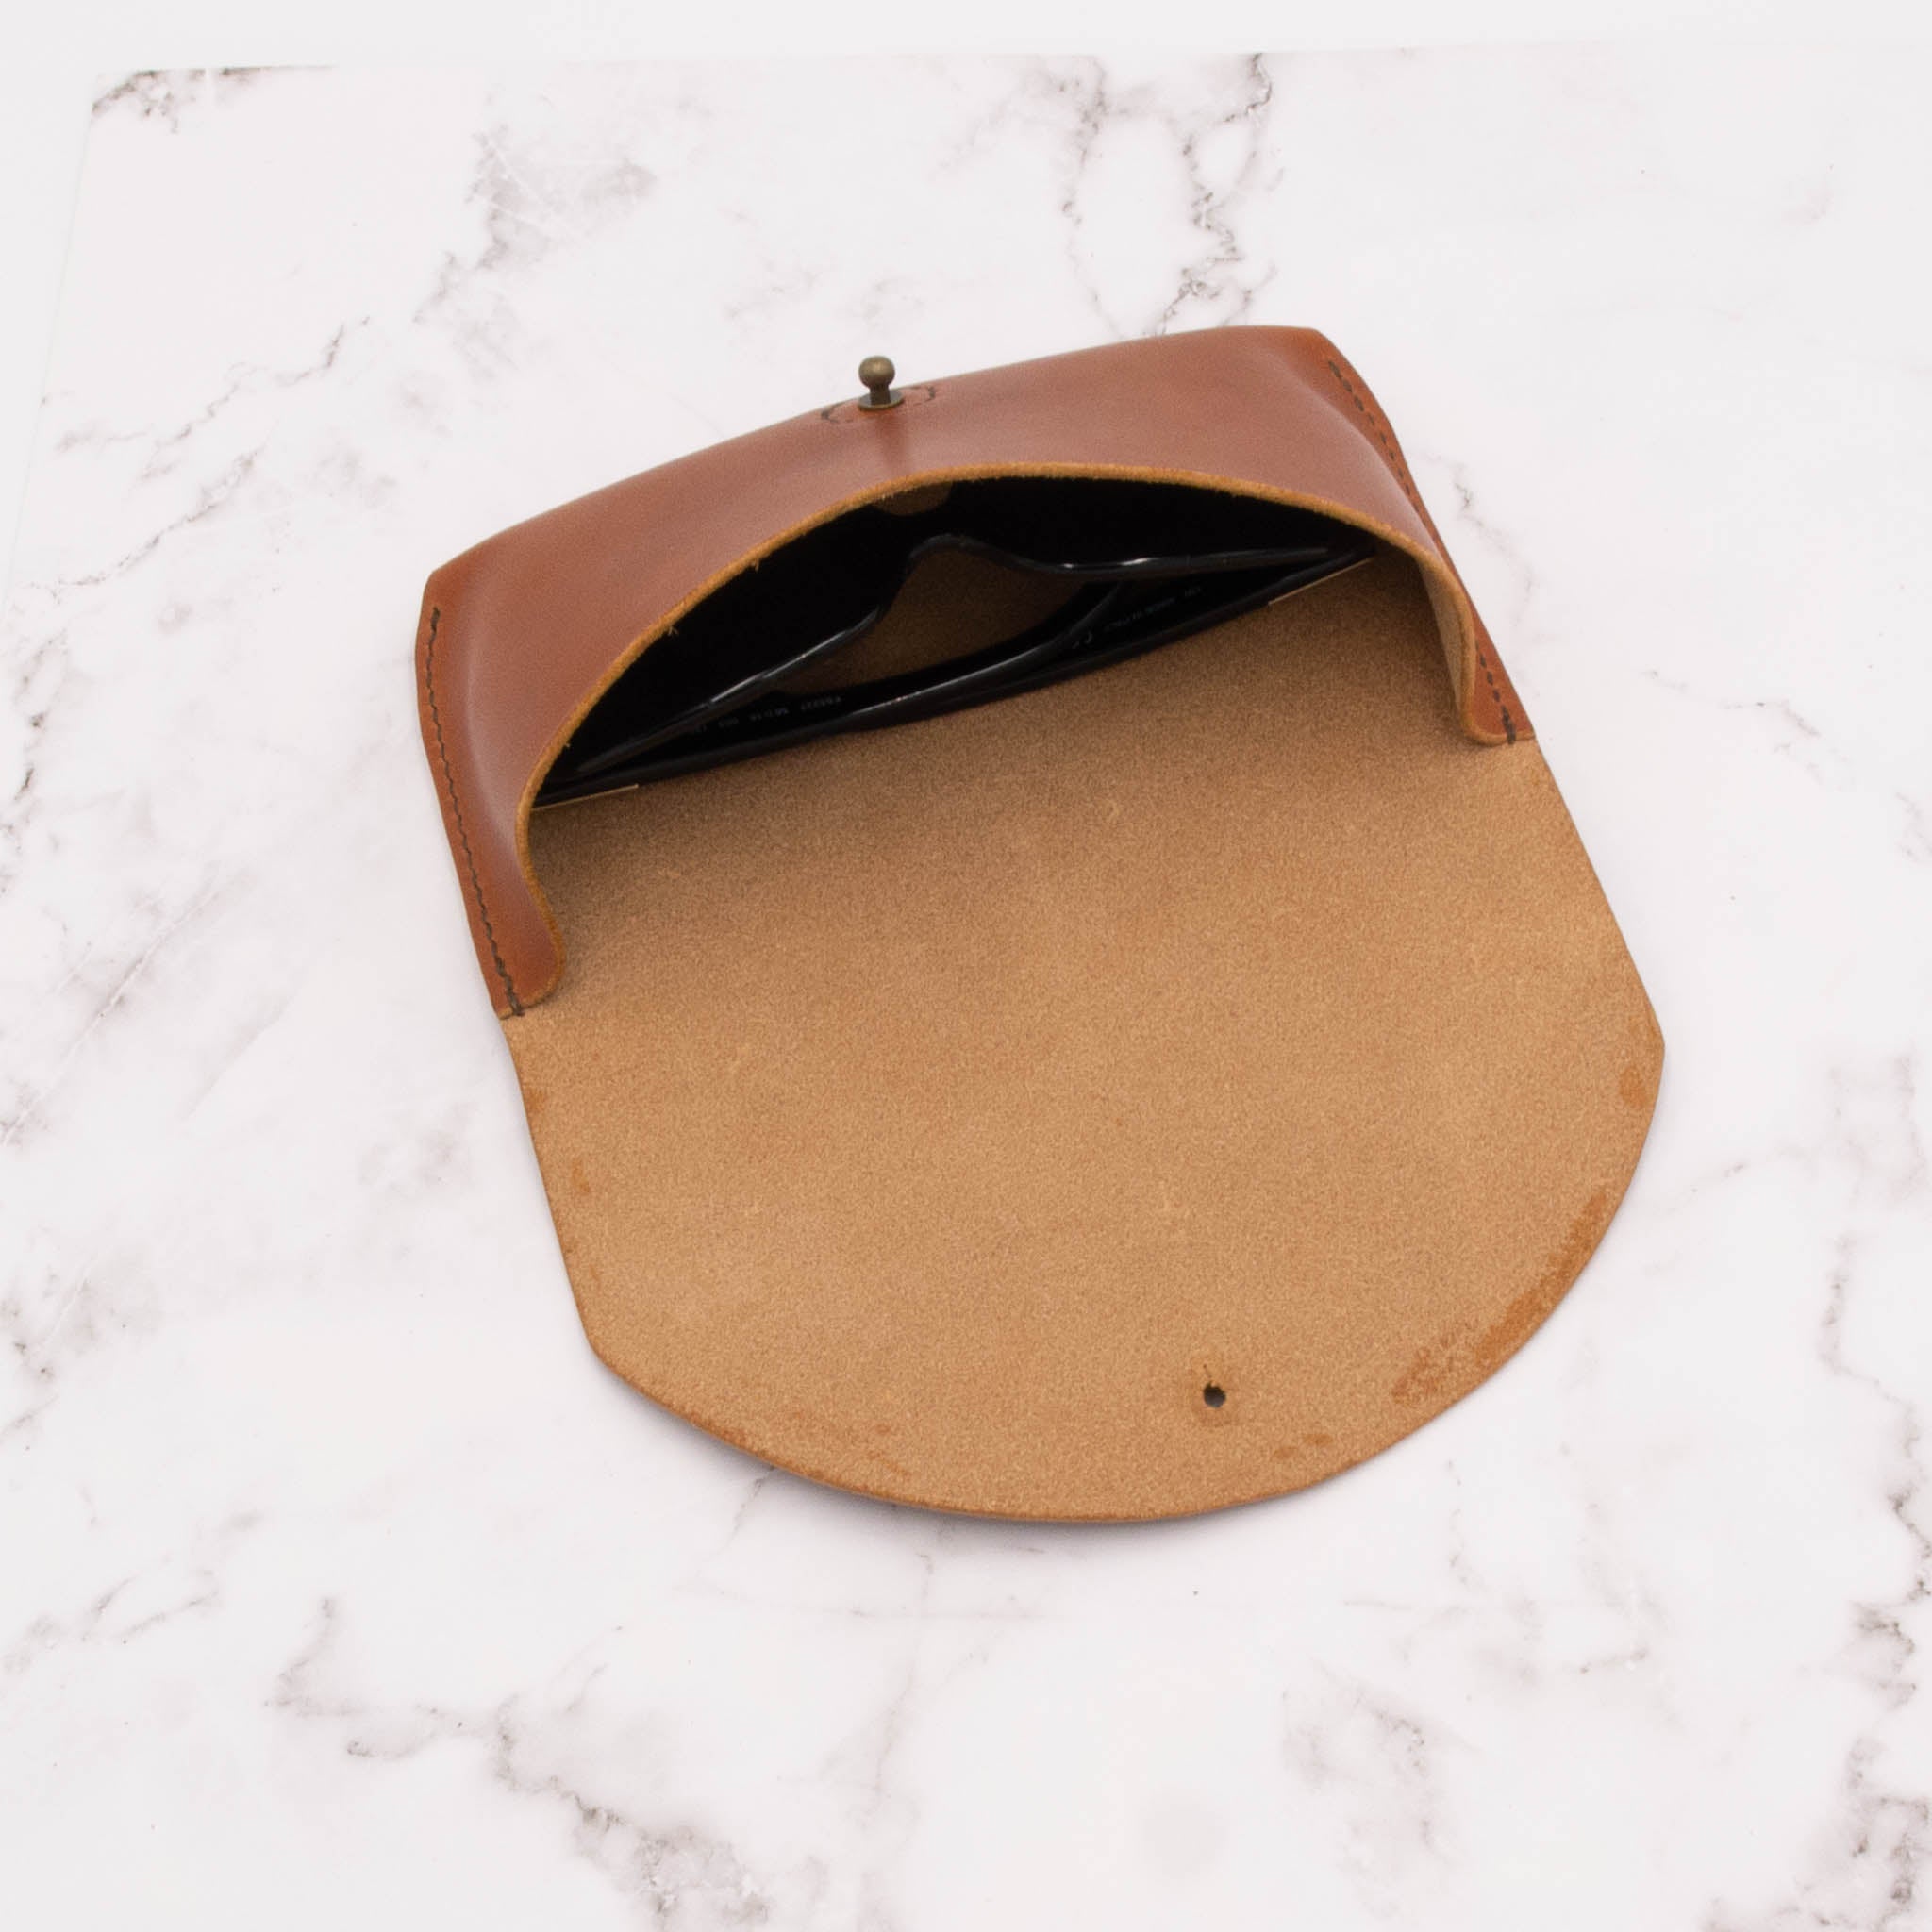 Sunglass Case - English Tan Soft Leather